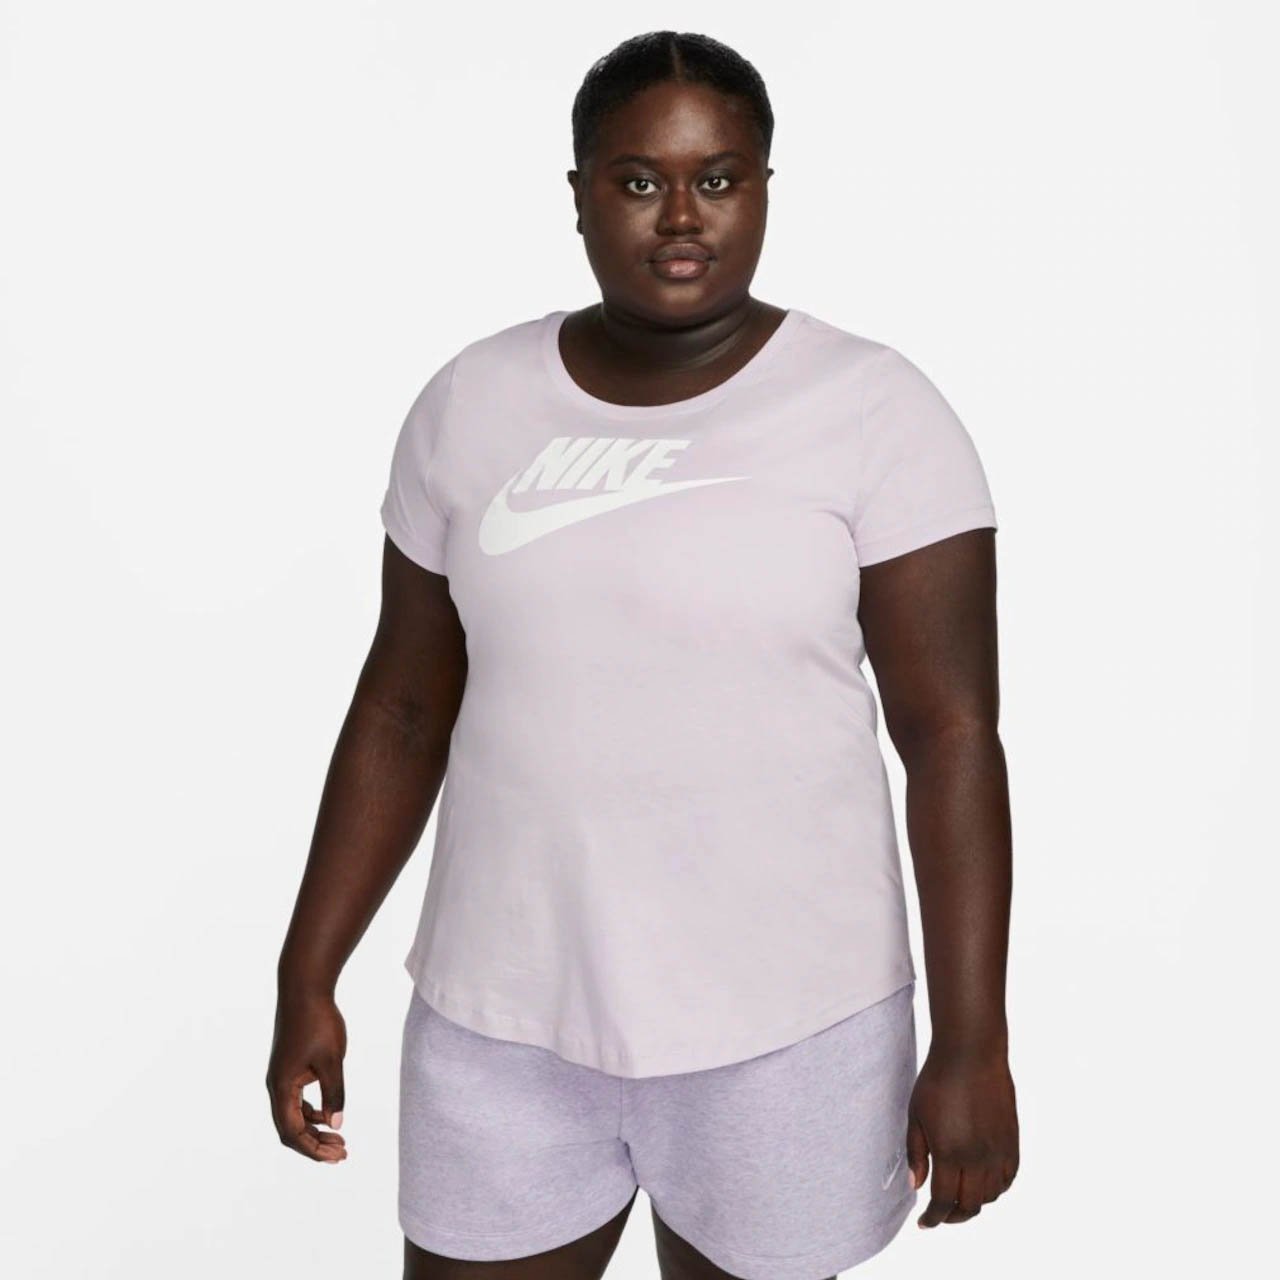 Camiseta Nike Sportswear Essential - Feminina